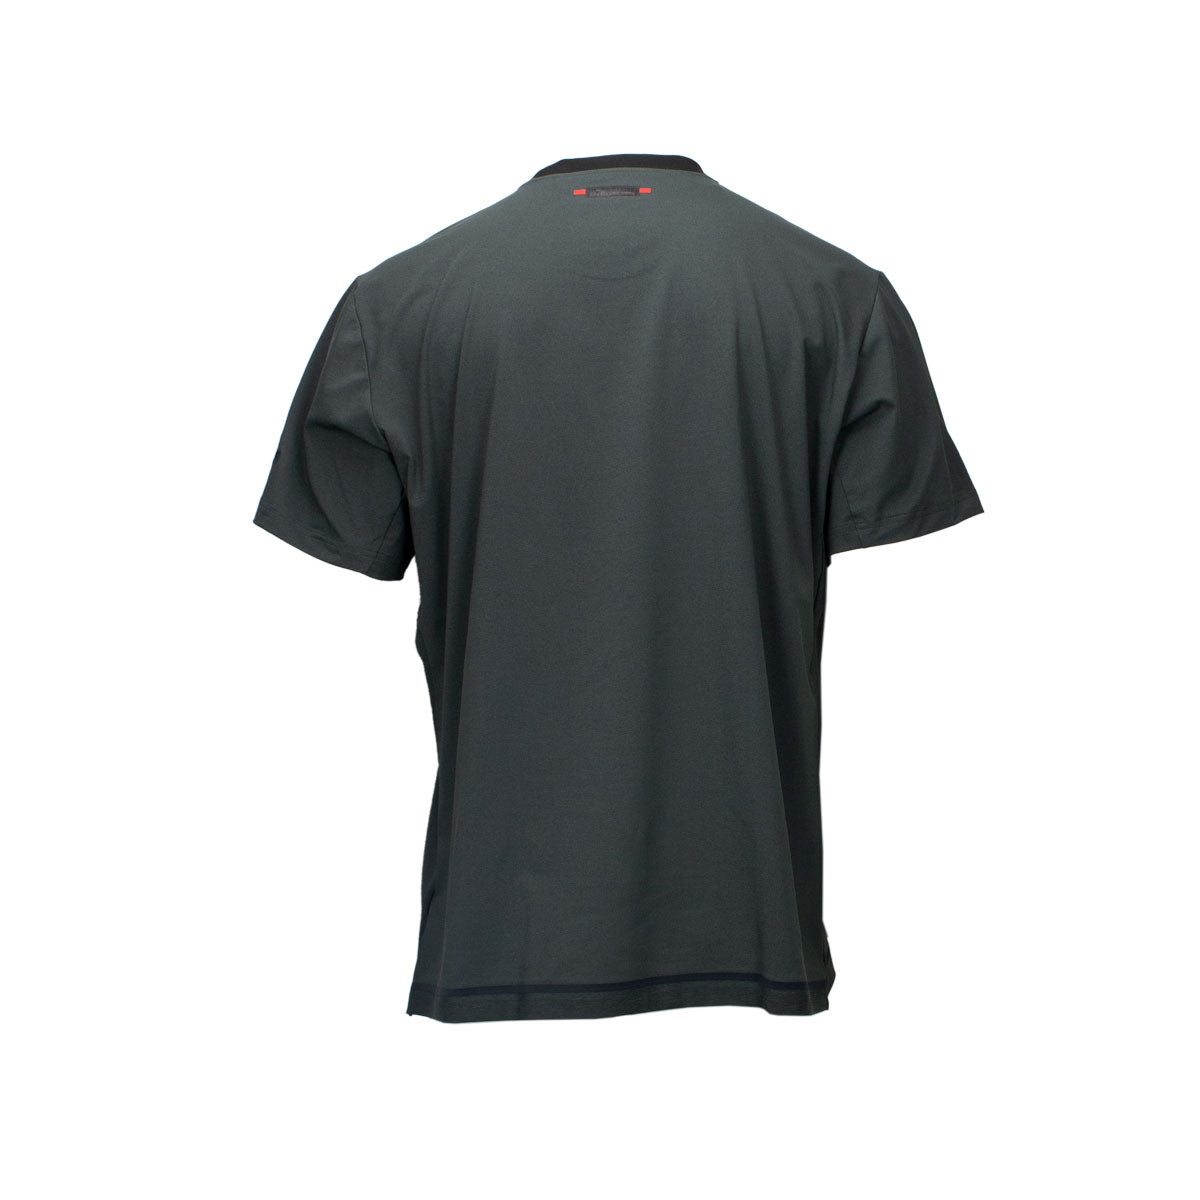 Adidas Barricade Tennis Tee Herren T-Shirt Sportshirt Climalite Grau CY3319 - Brand Dealers Arena e.K. - BDA24